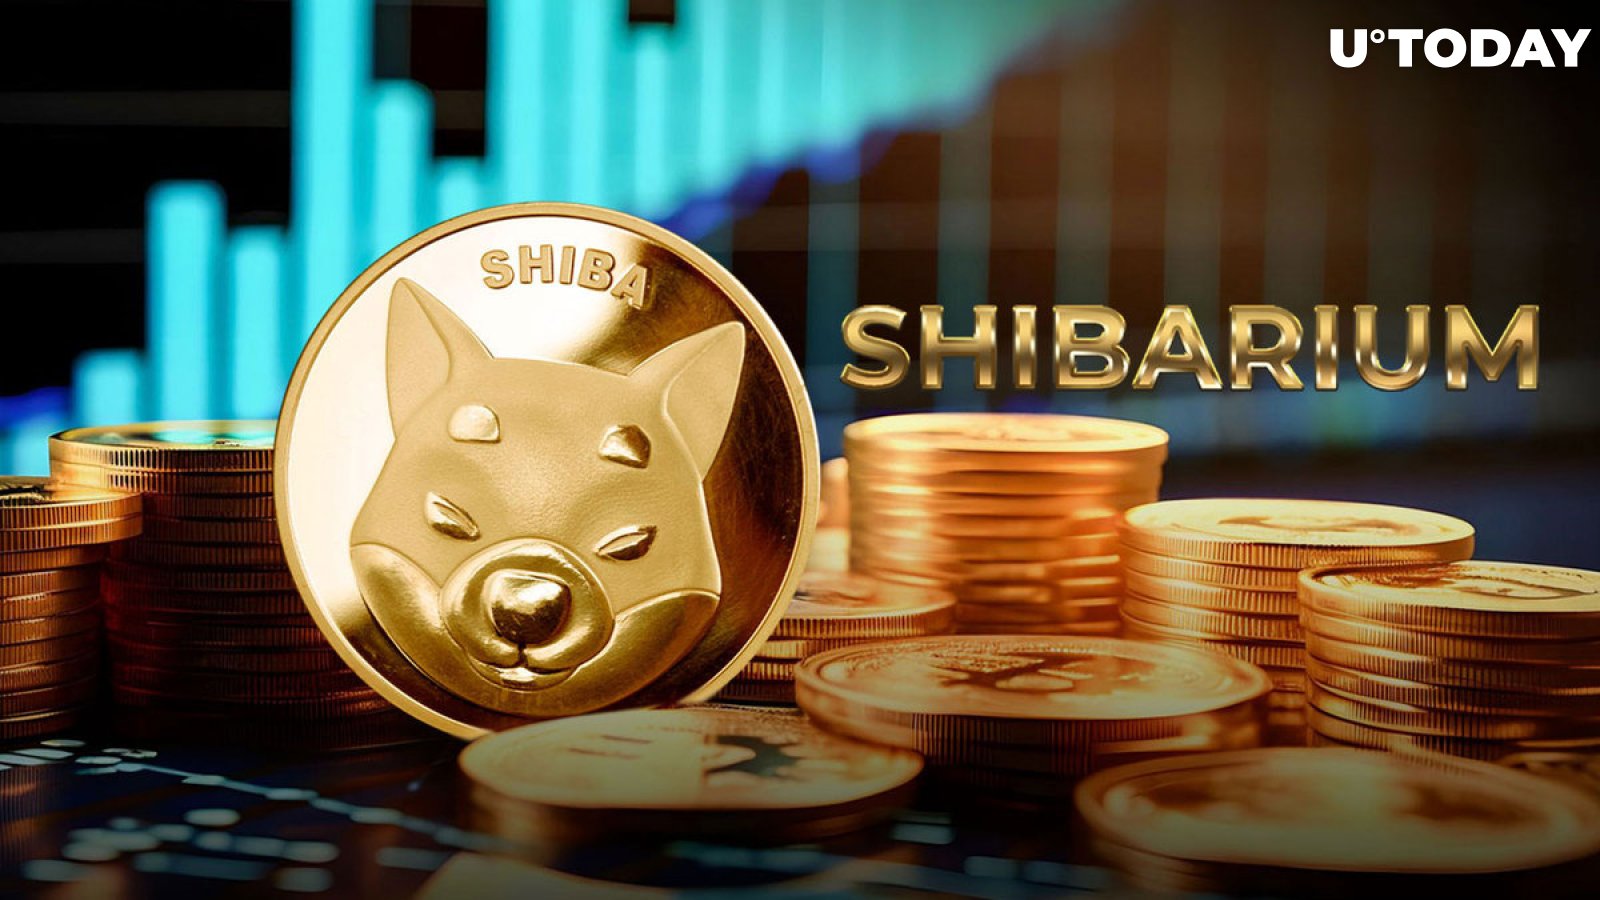 Shiba Inu: Shibarium makes history by reaching a major milestone